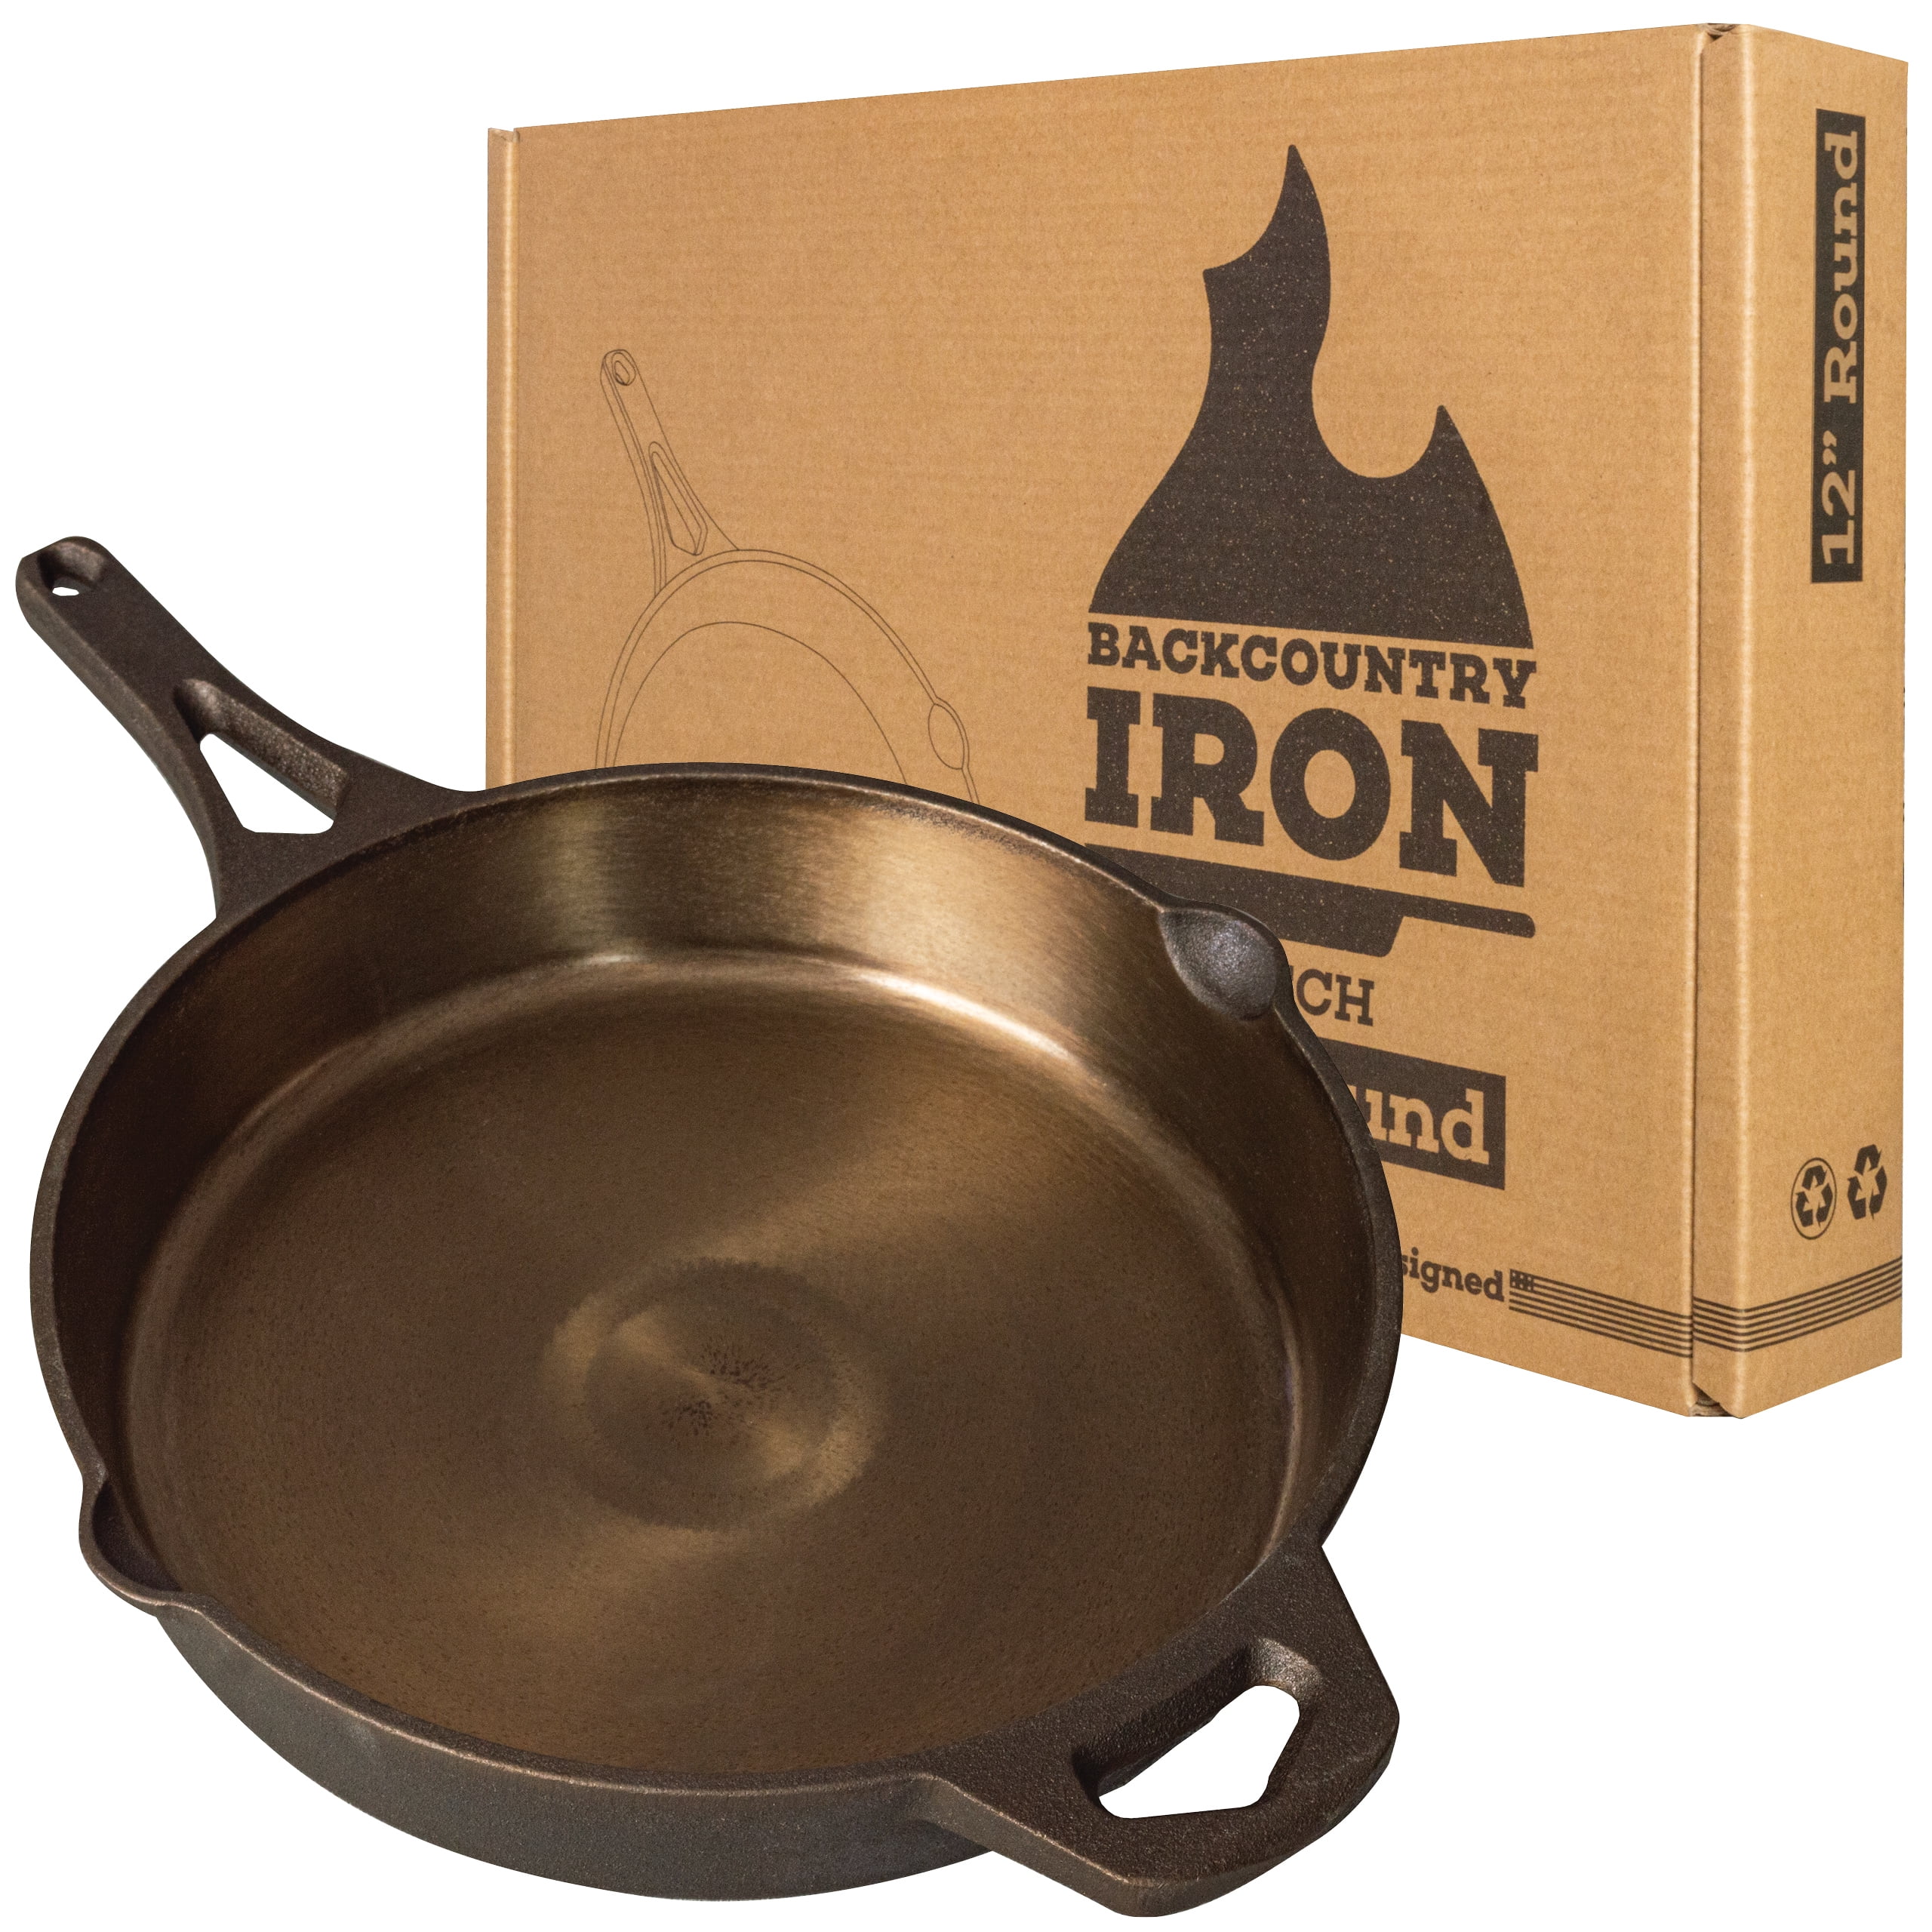 Backcountry Iron 4.75 Cast Iron Cauldron